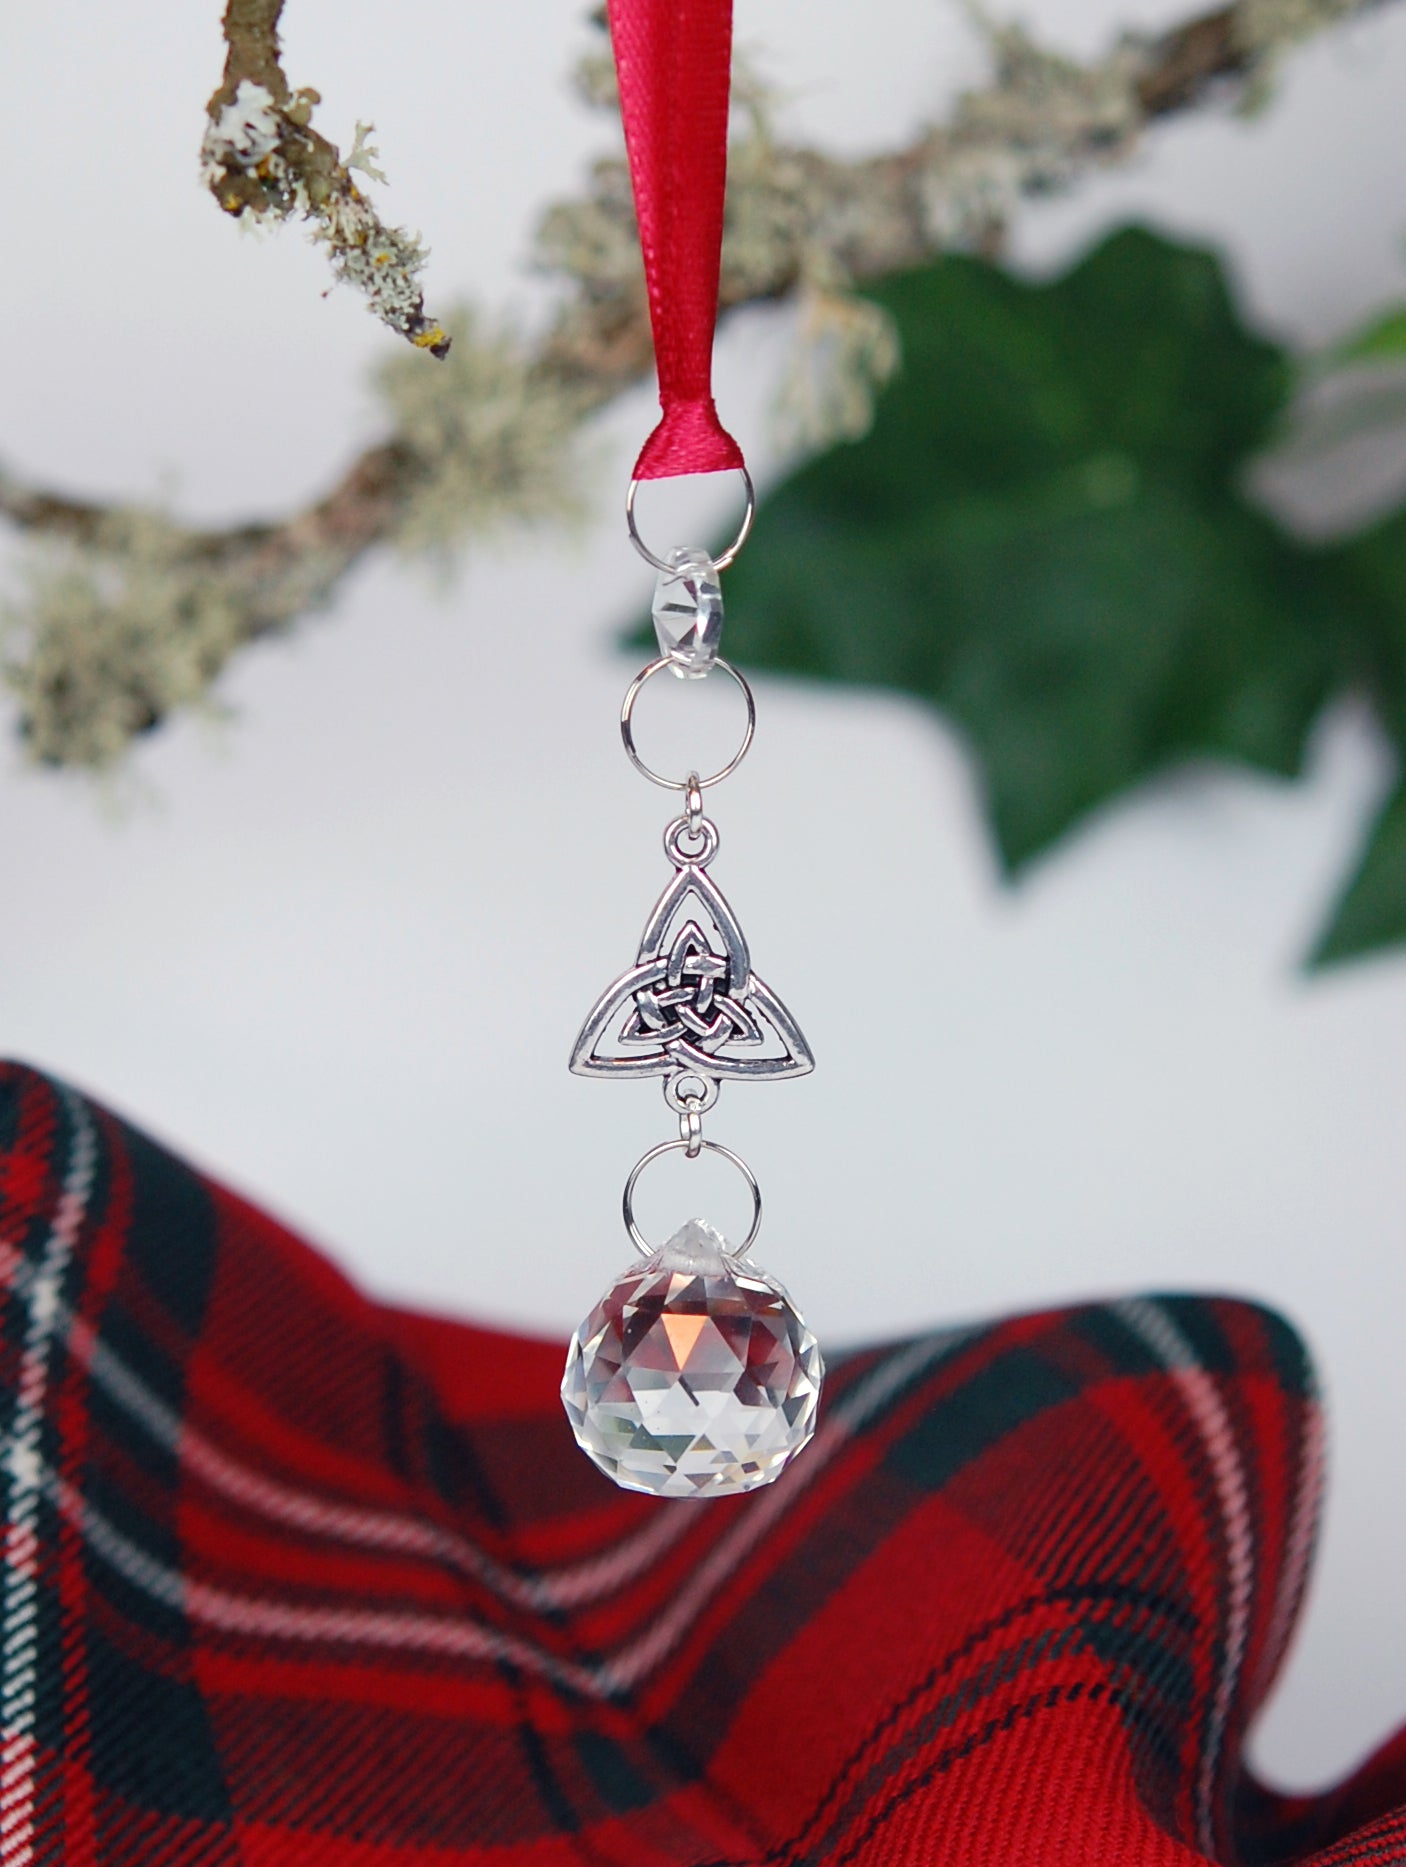 Crystal and Trinity Knot Christmas Ornament